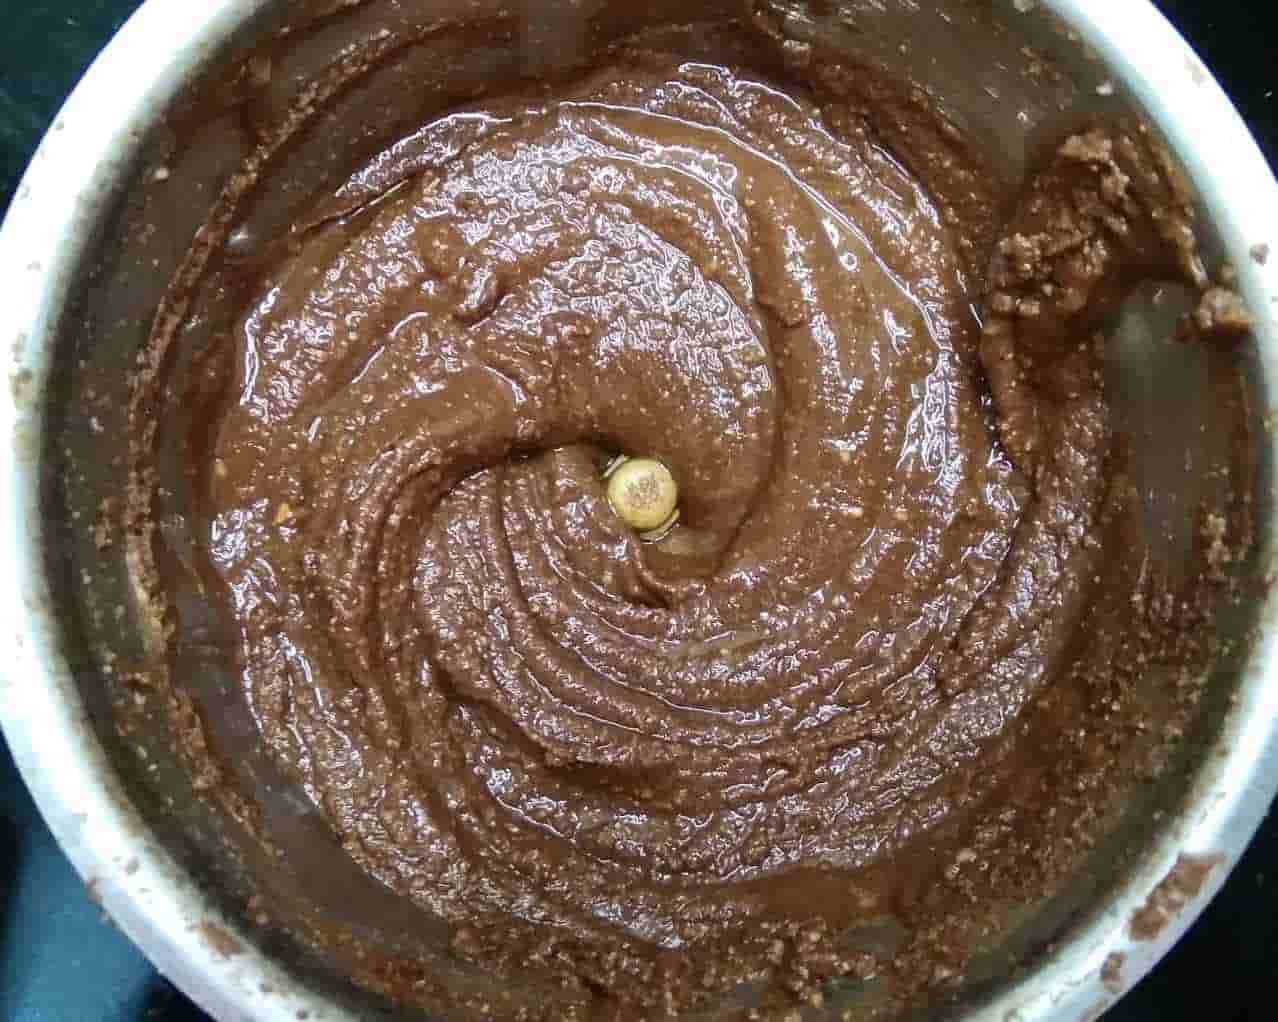 Homemade Chocolate Peanut Butter Recipe